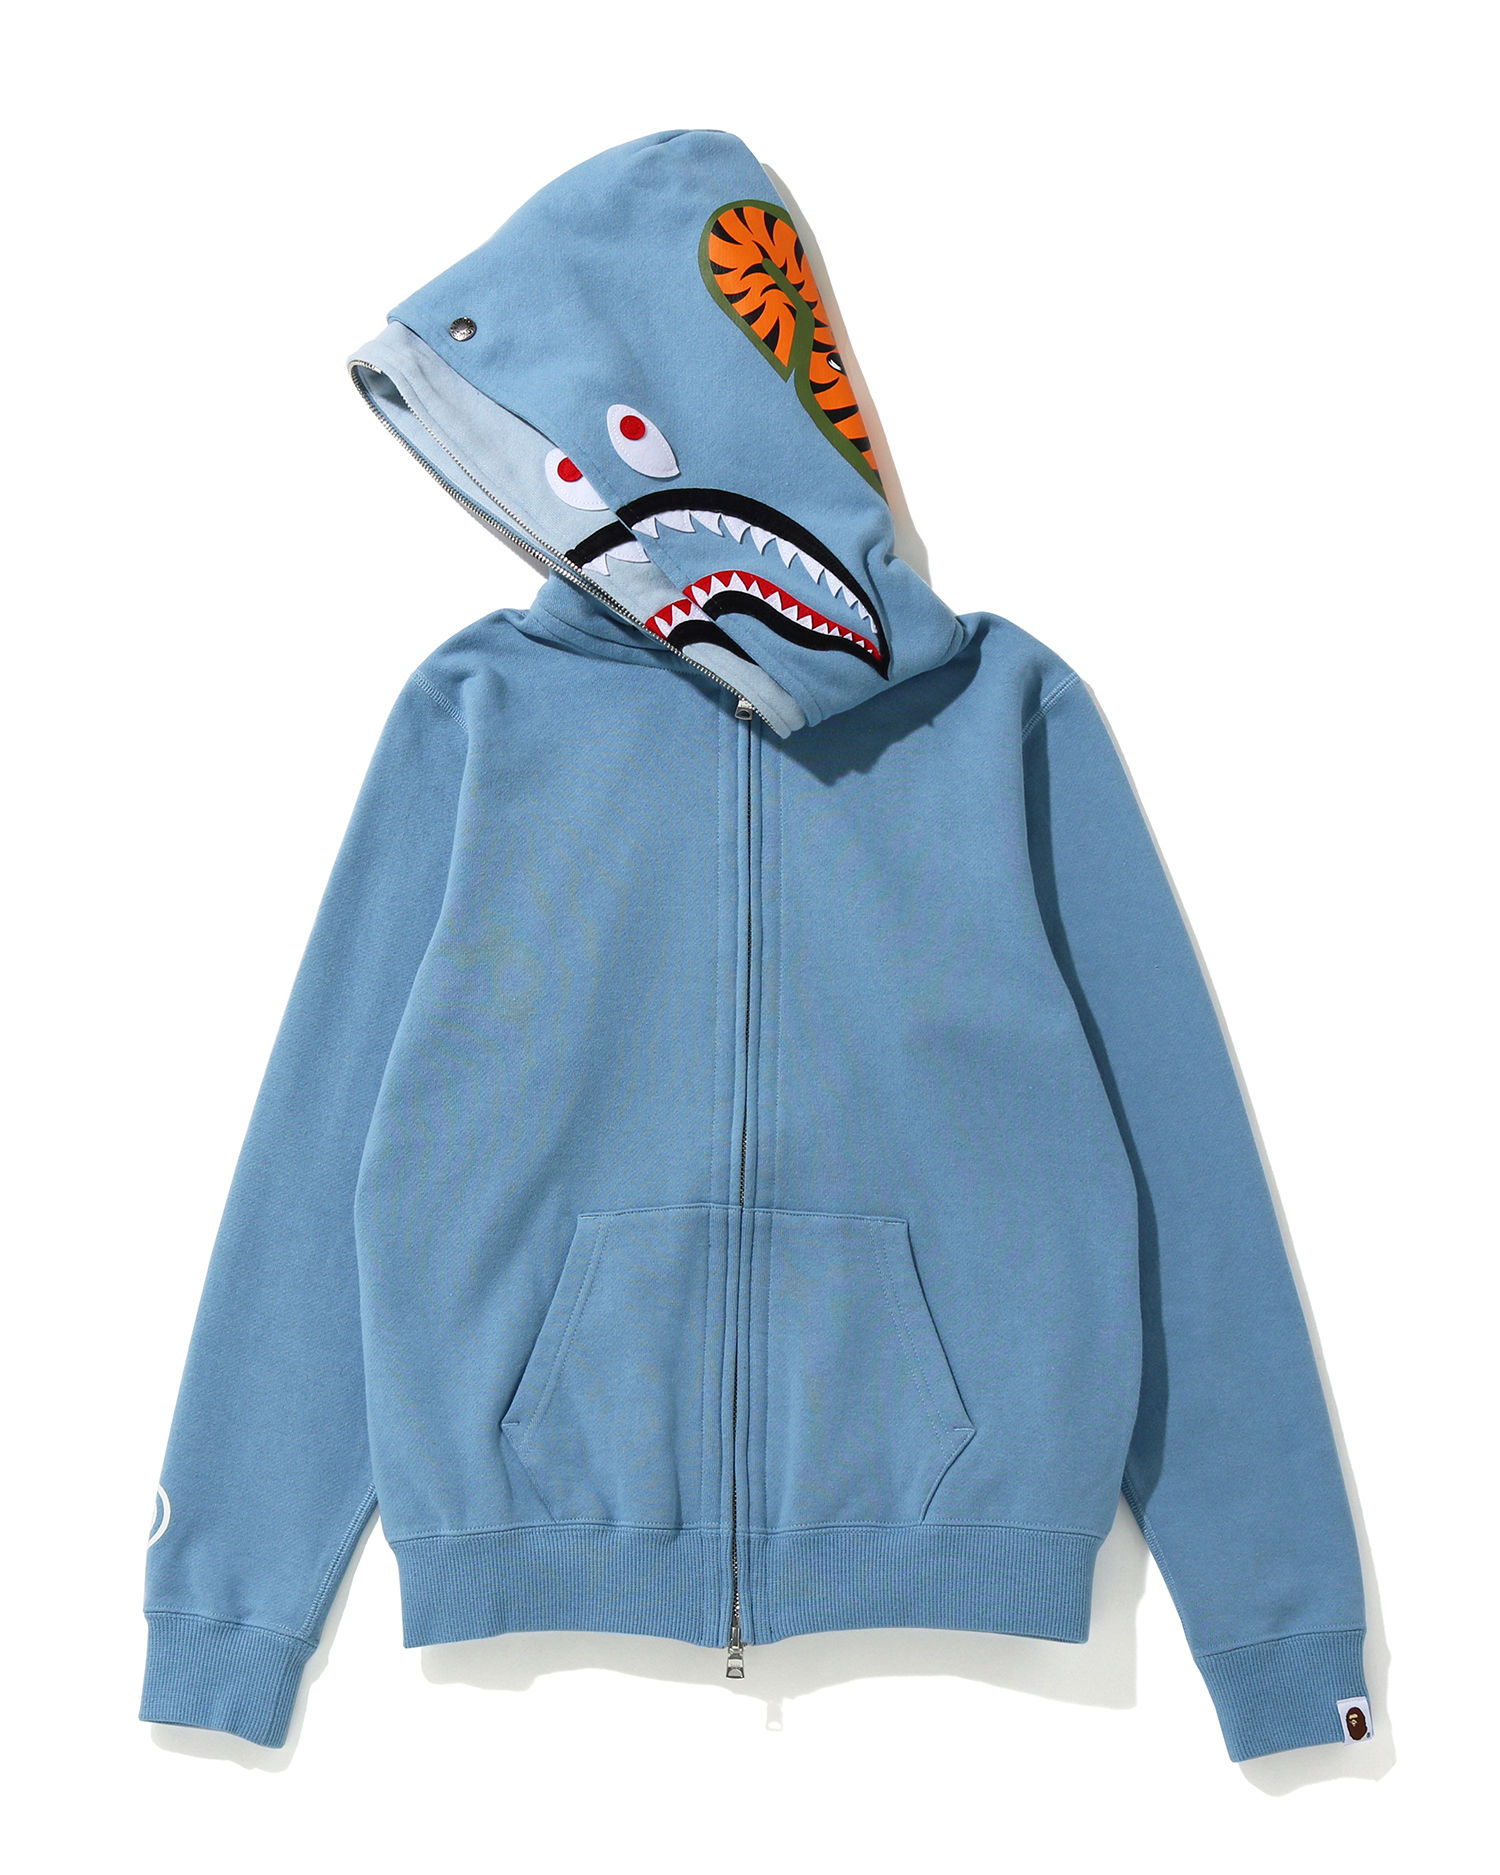 BAPE Shark Full Zip Double Hood jacket Now On BAPEONLINE